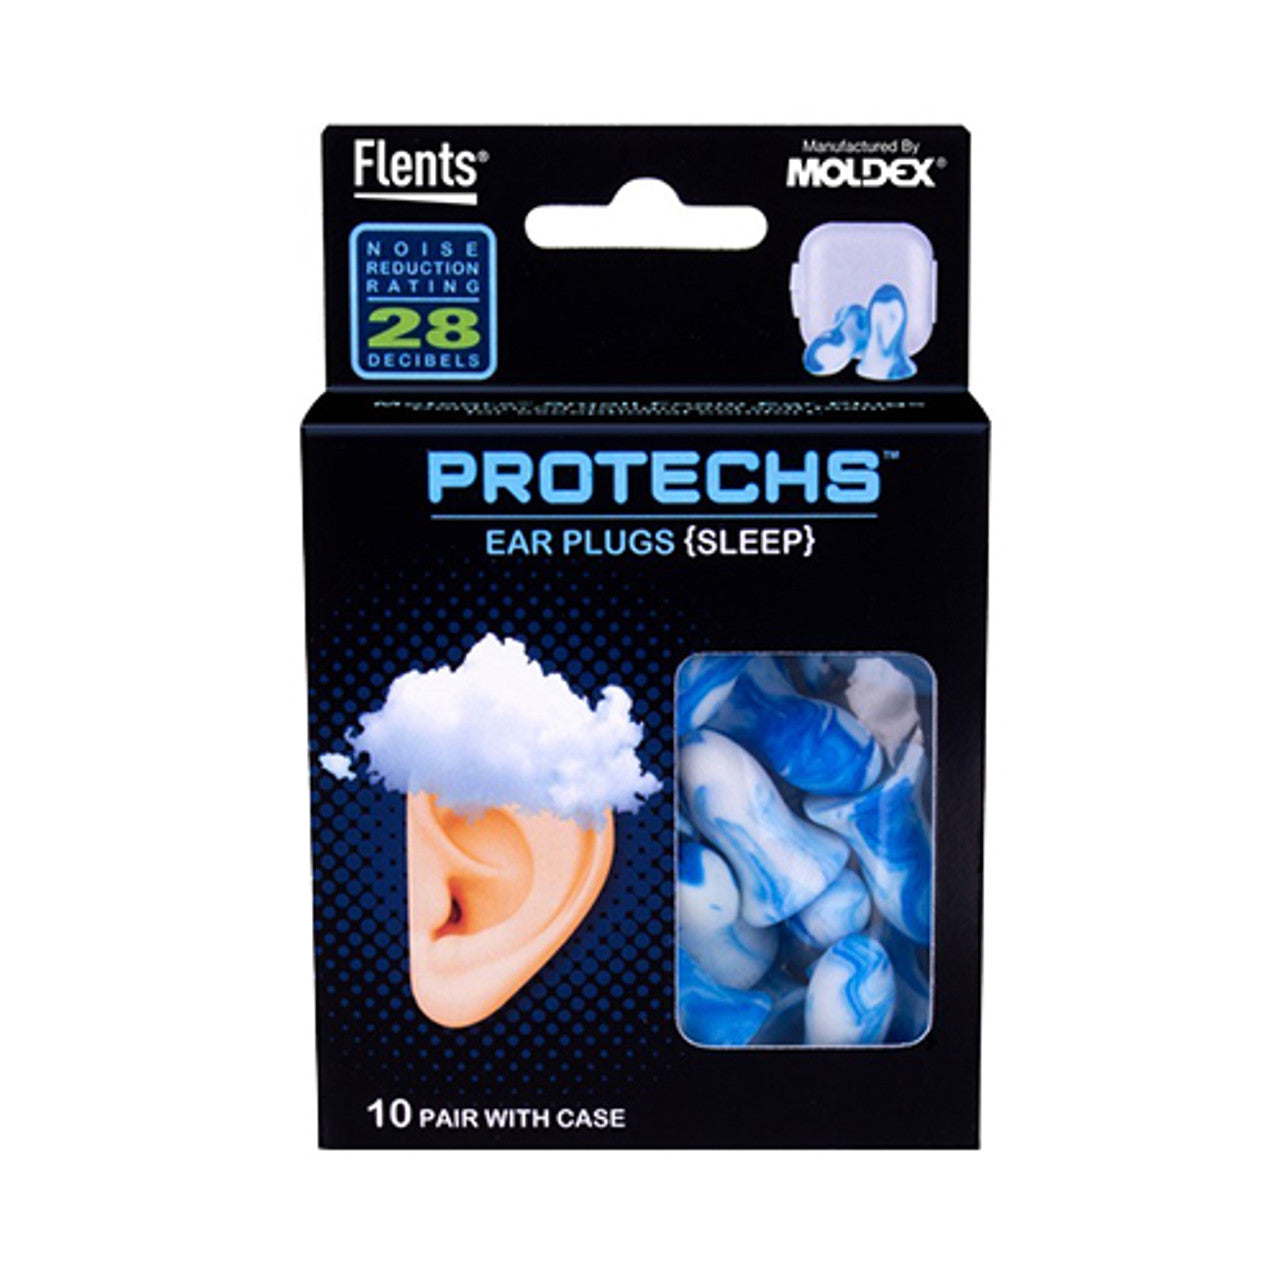 Flents Protechs Foam Sleep Ear Plugs With Case, 10 Pair